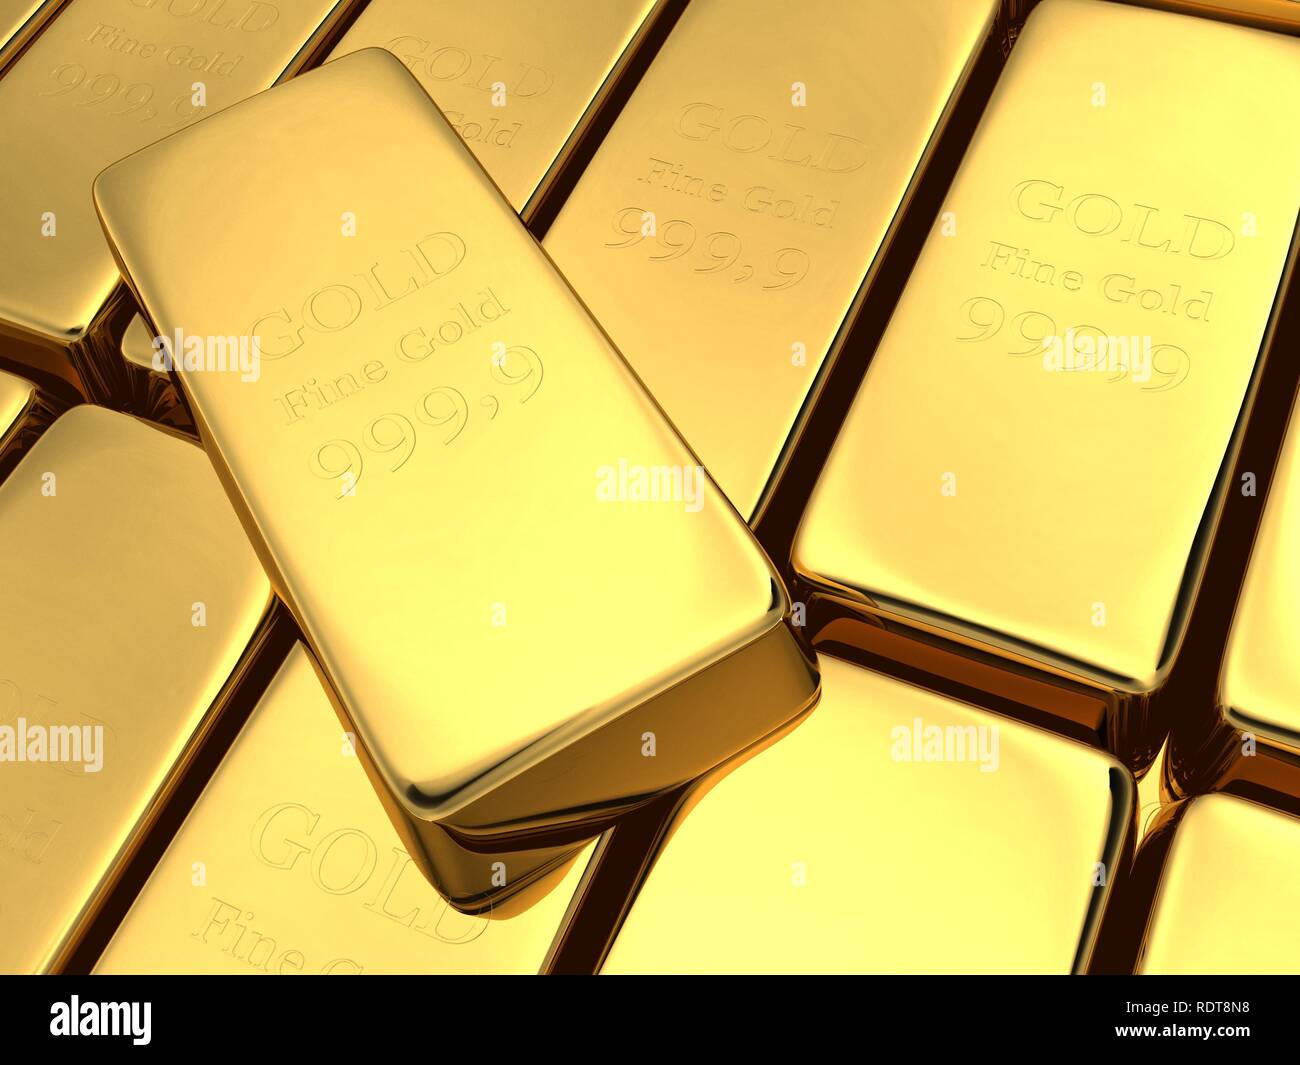 Gold bars Stock Photo